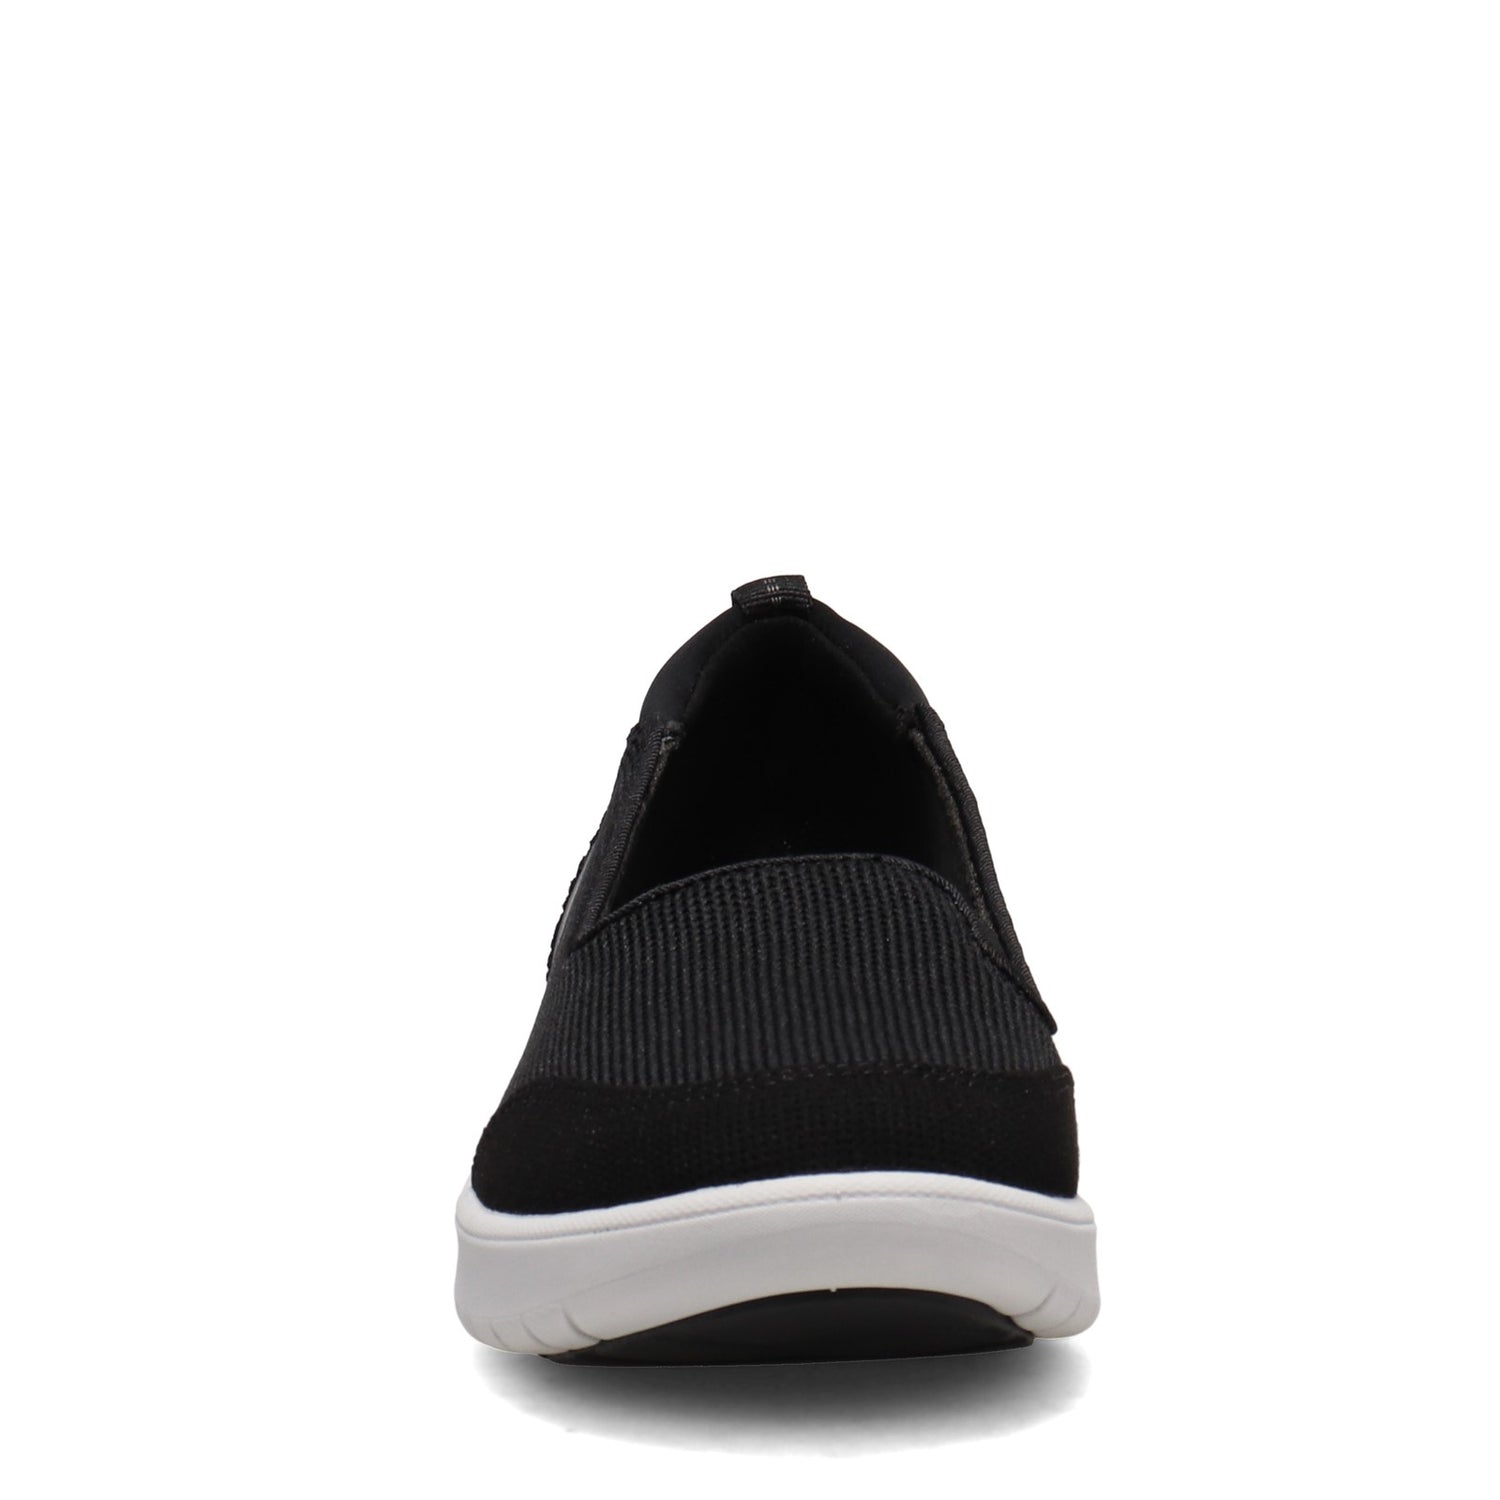 Peltz Shoes  Women's Clarks Adella Blush Slip-On BLACK 26156319